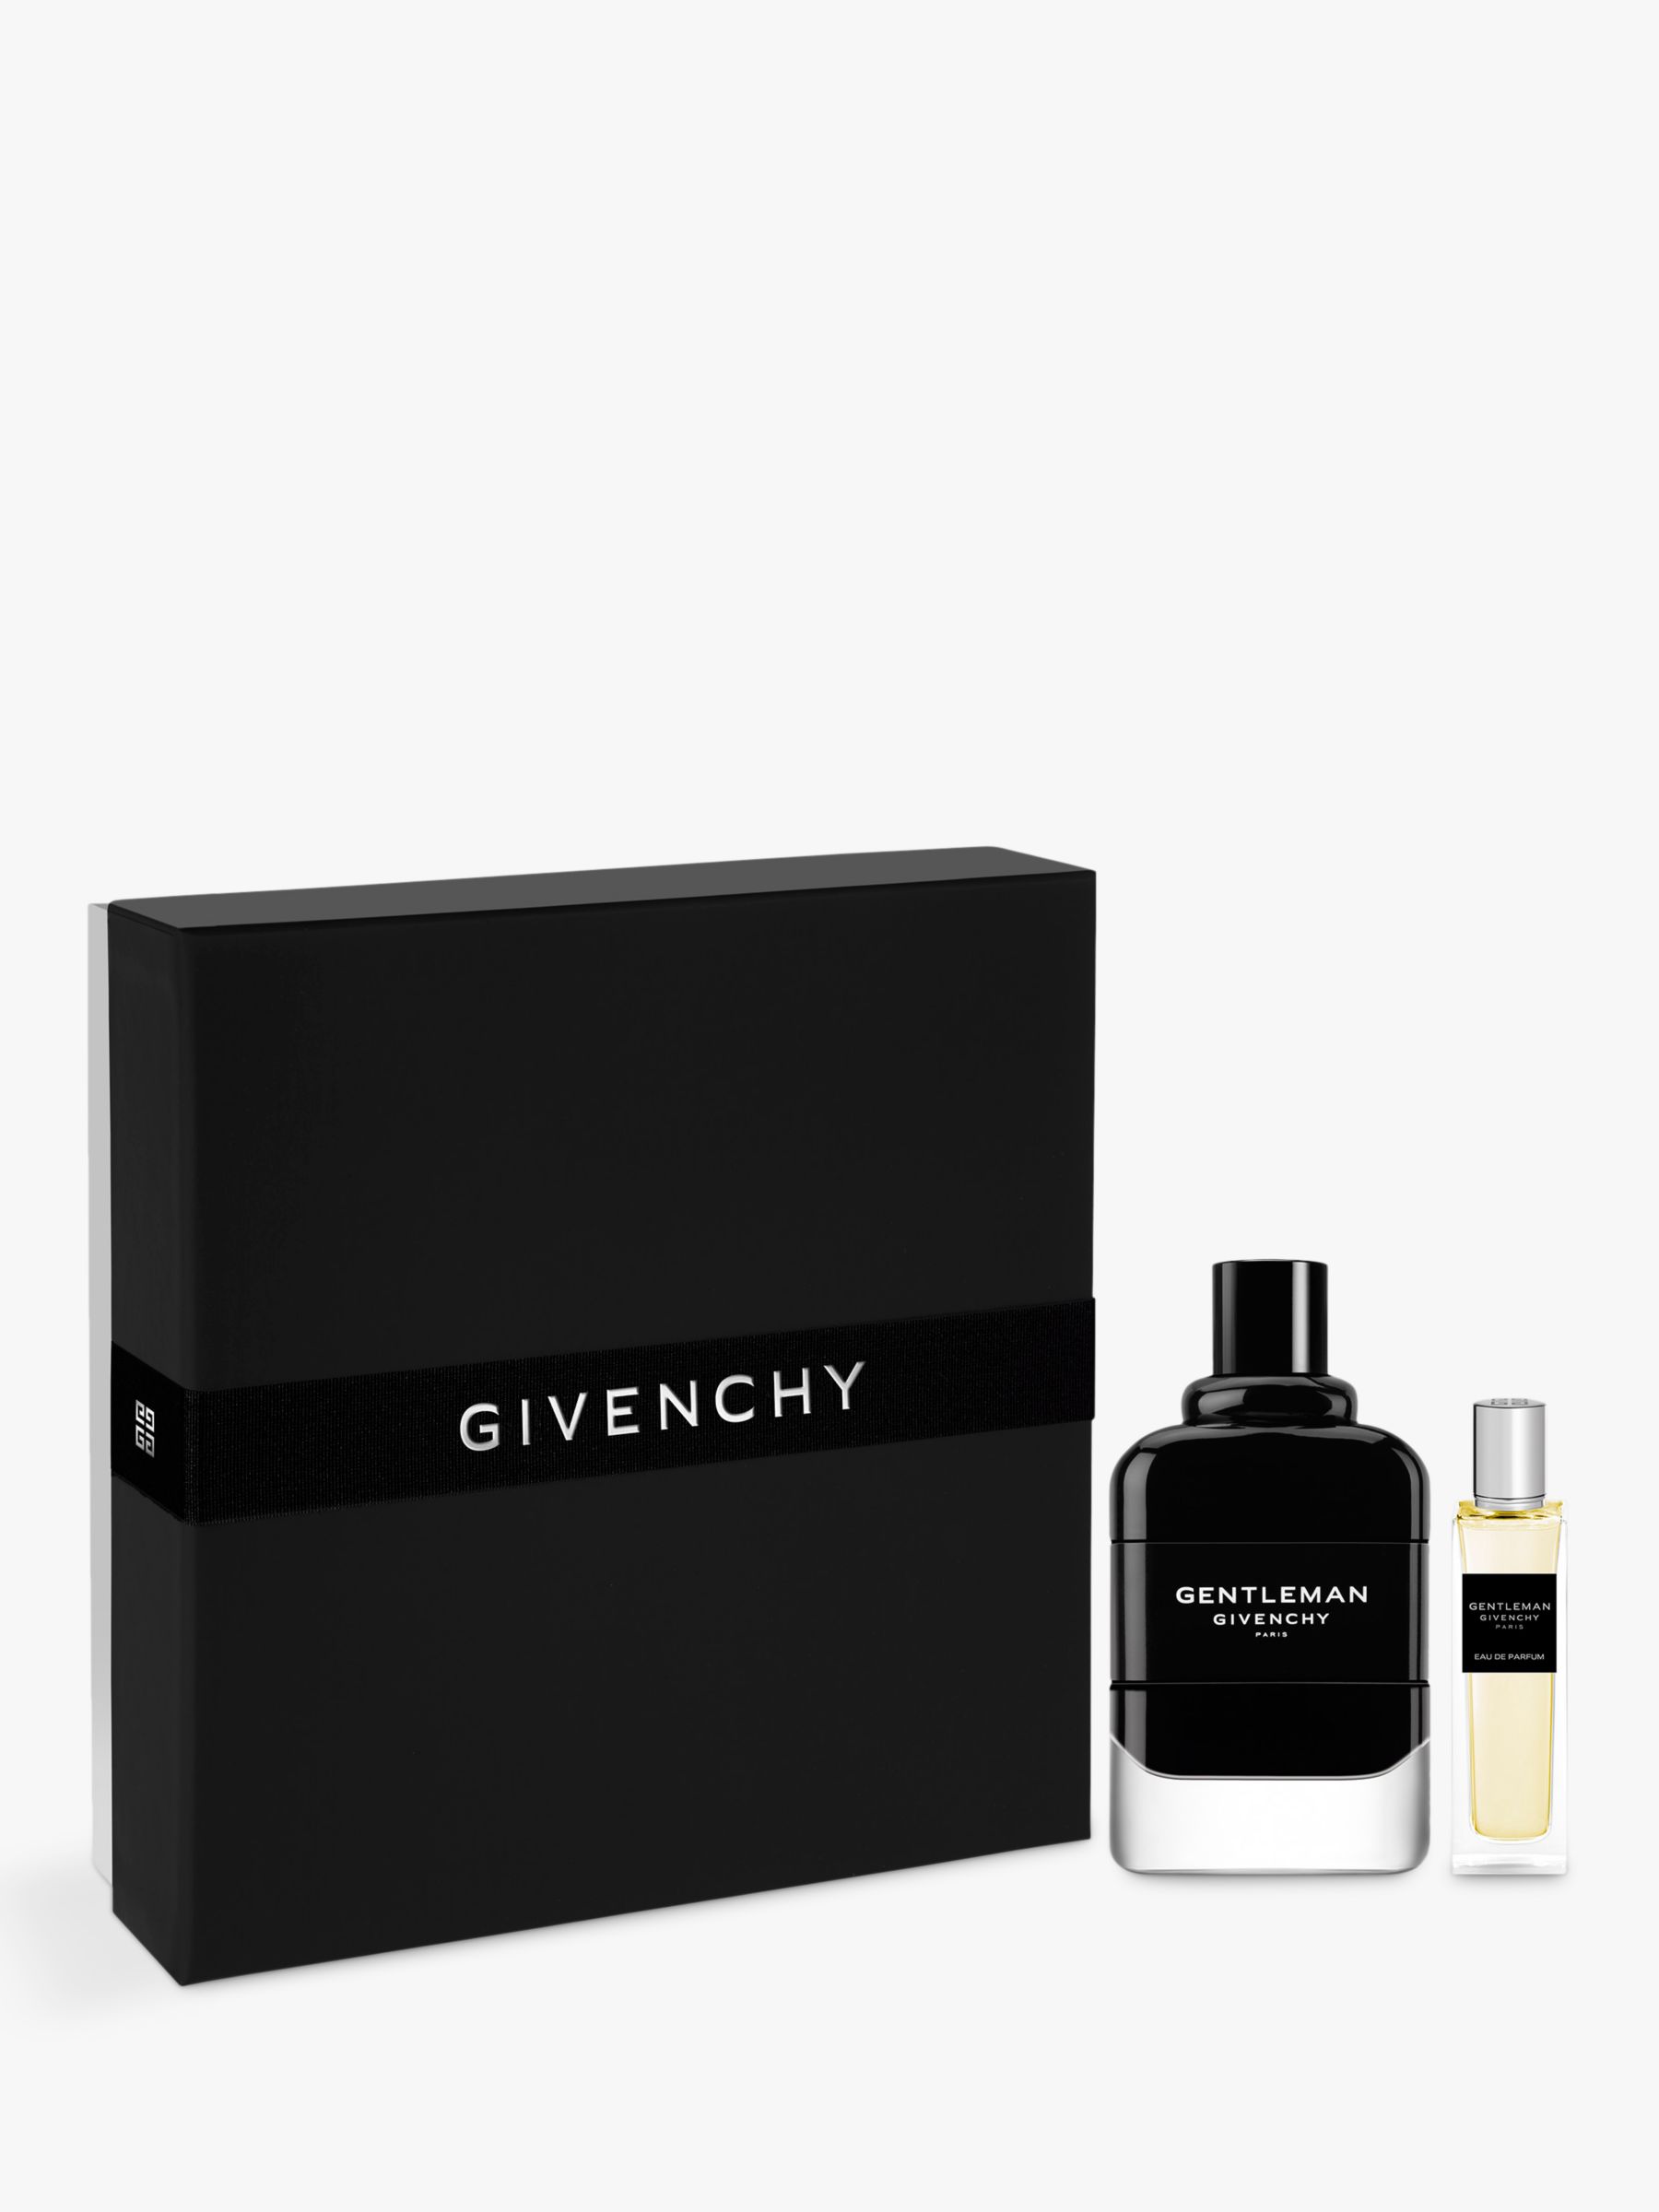 Givenchy Gentleman Givenchy Eau de Parfum 100ml Fragrance Gift Set